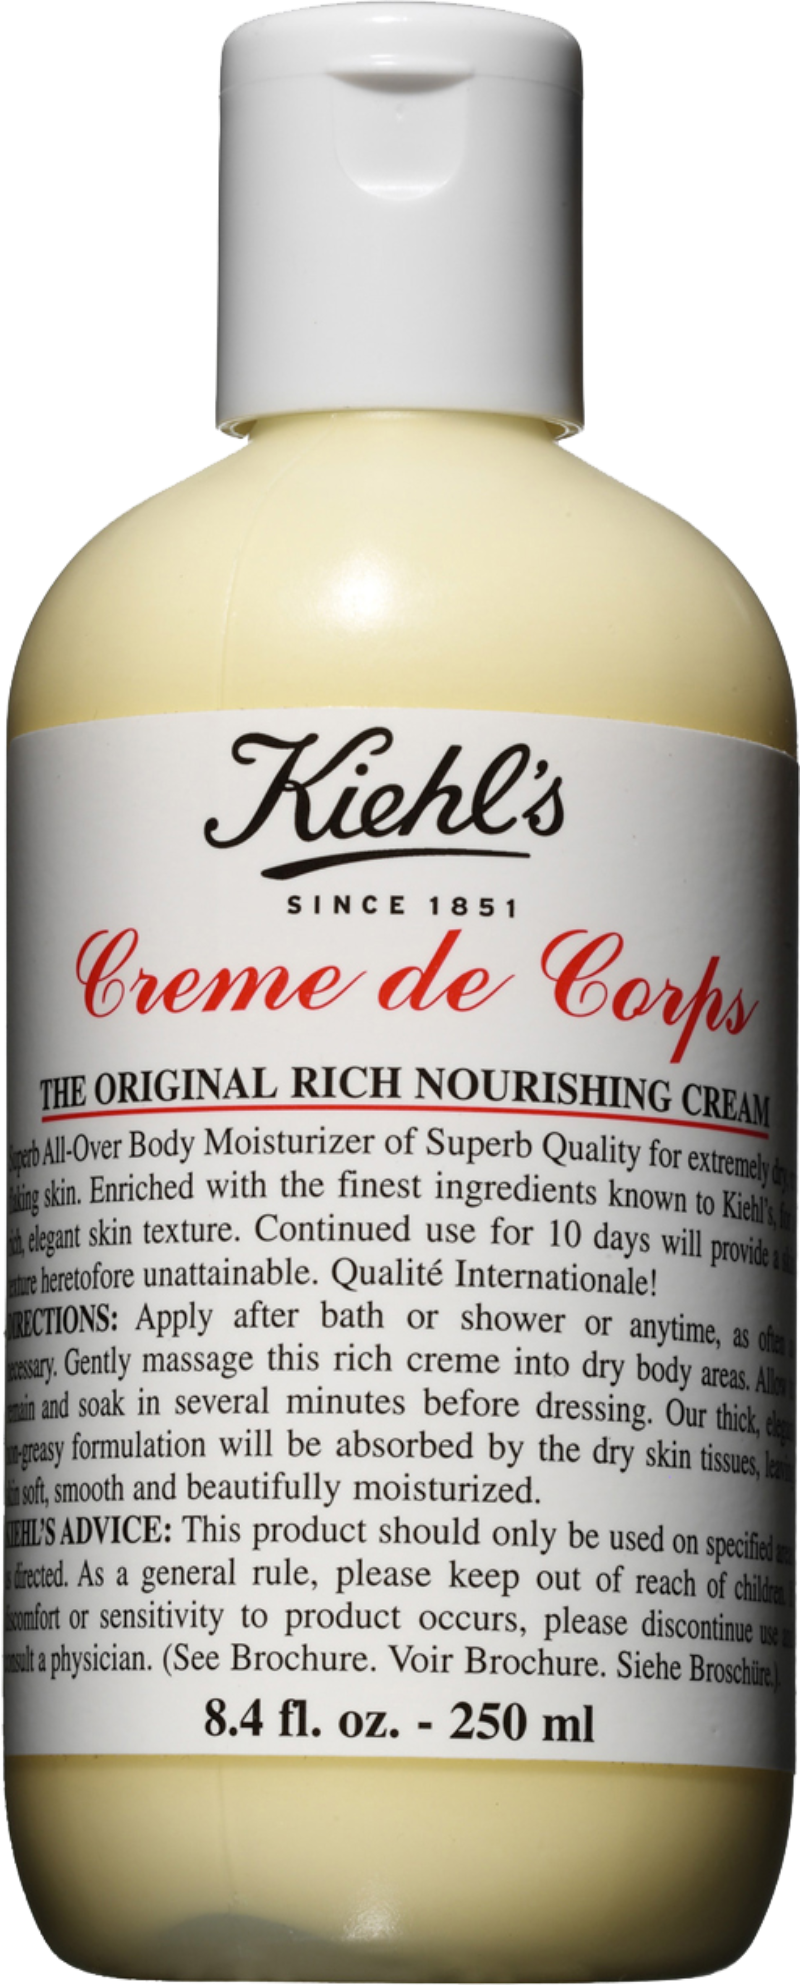 Kiehl's Creme De Corps ingredients (Explained)